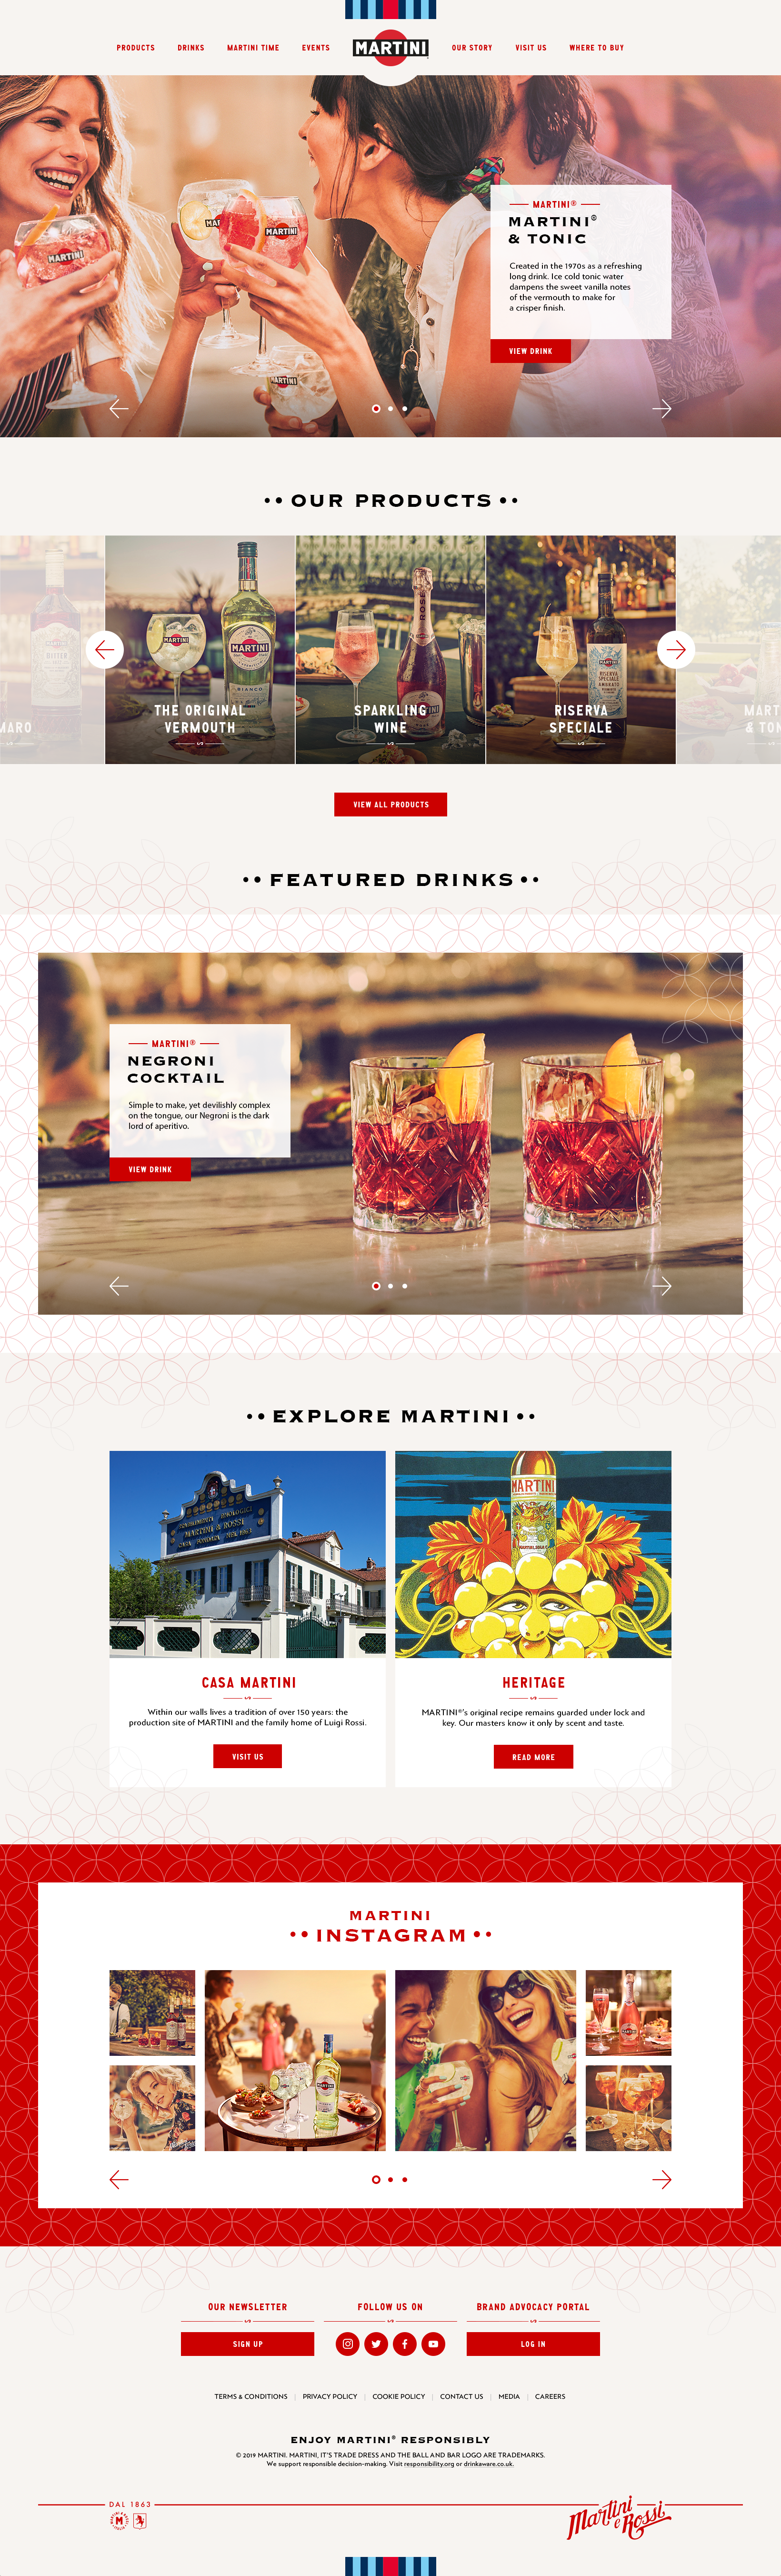 martini-homepage-full